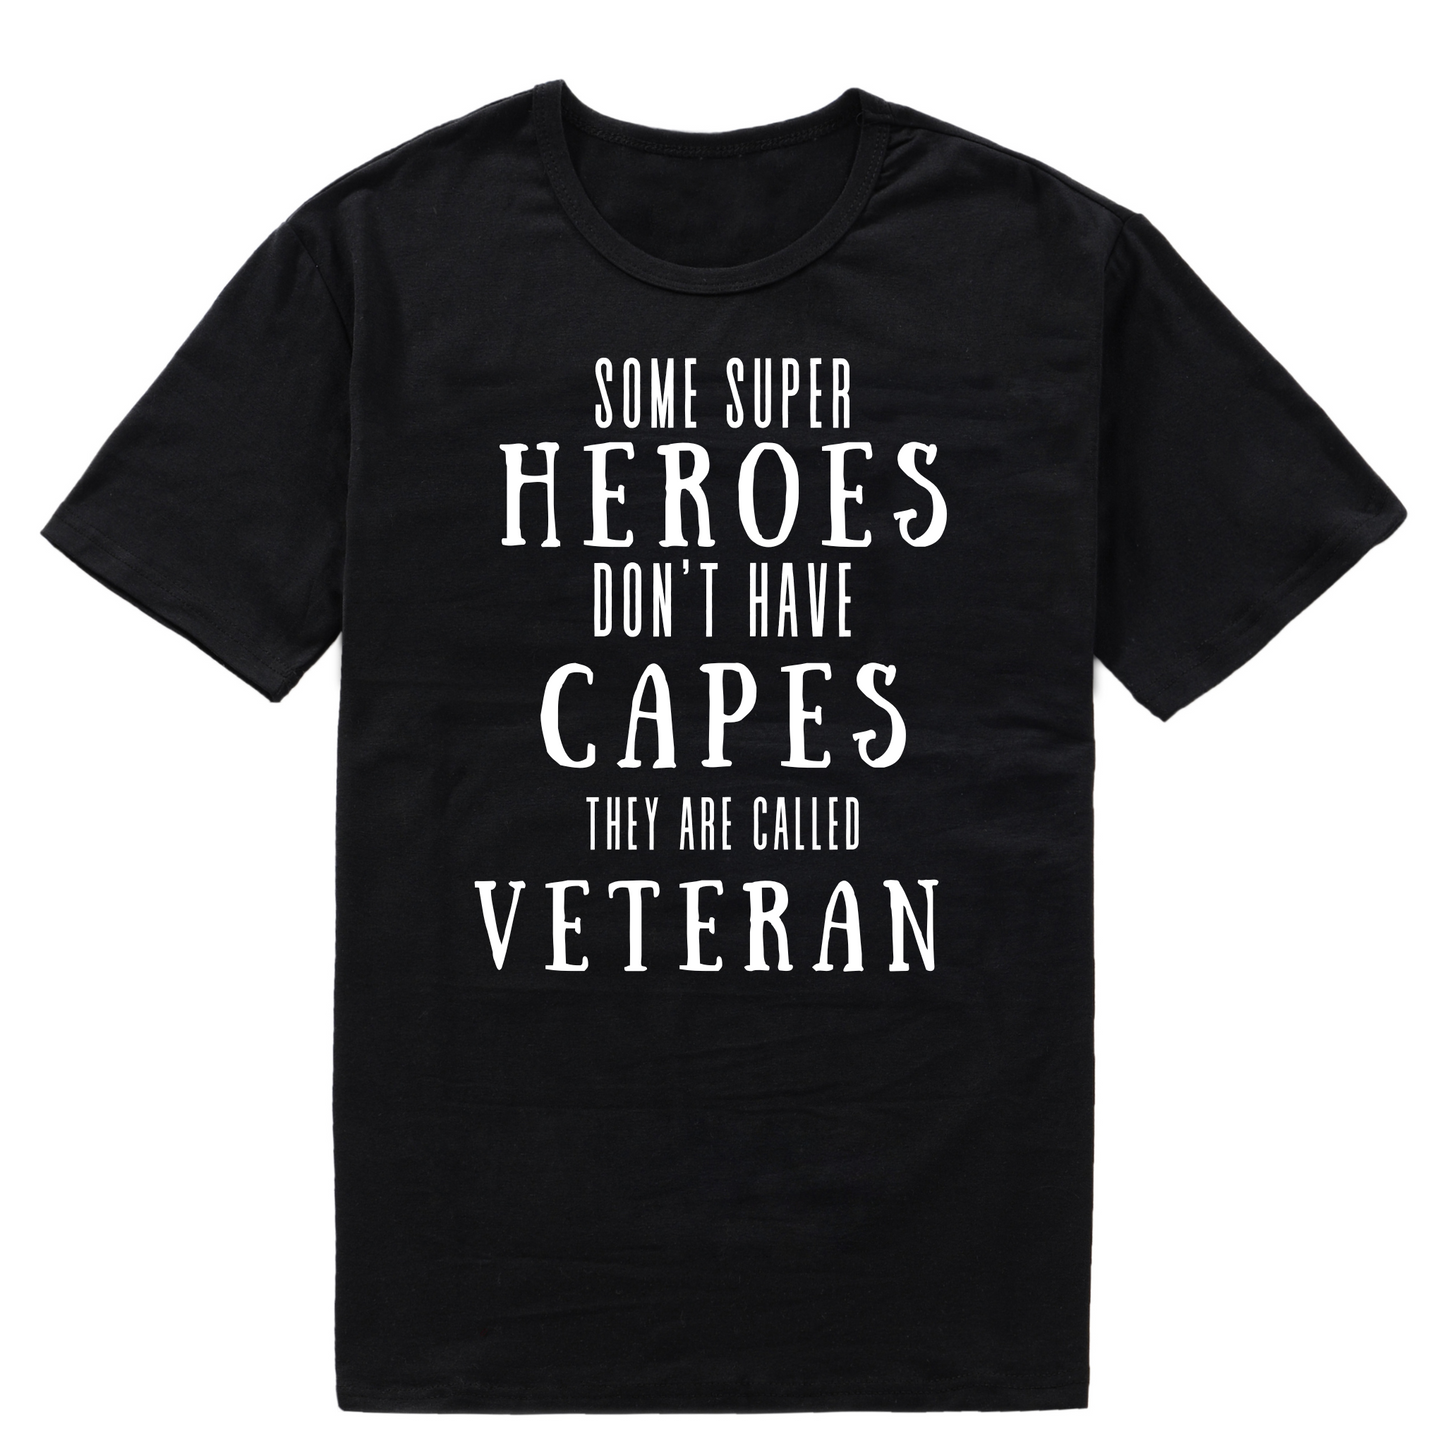 Veteran super hero t-shirt - Men's t-shirt - Premium t-shirt from Lees Krazy Teez - Just $21.95! Shop now at Lees Krazy Teez